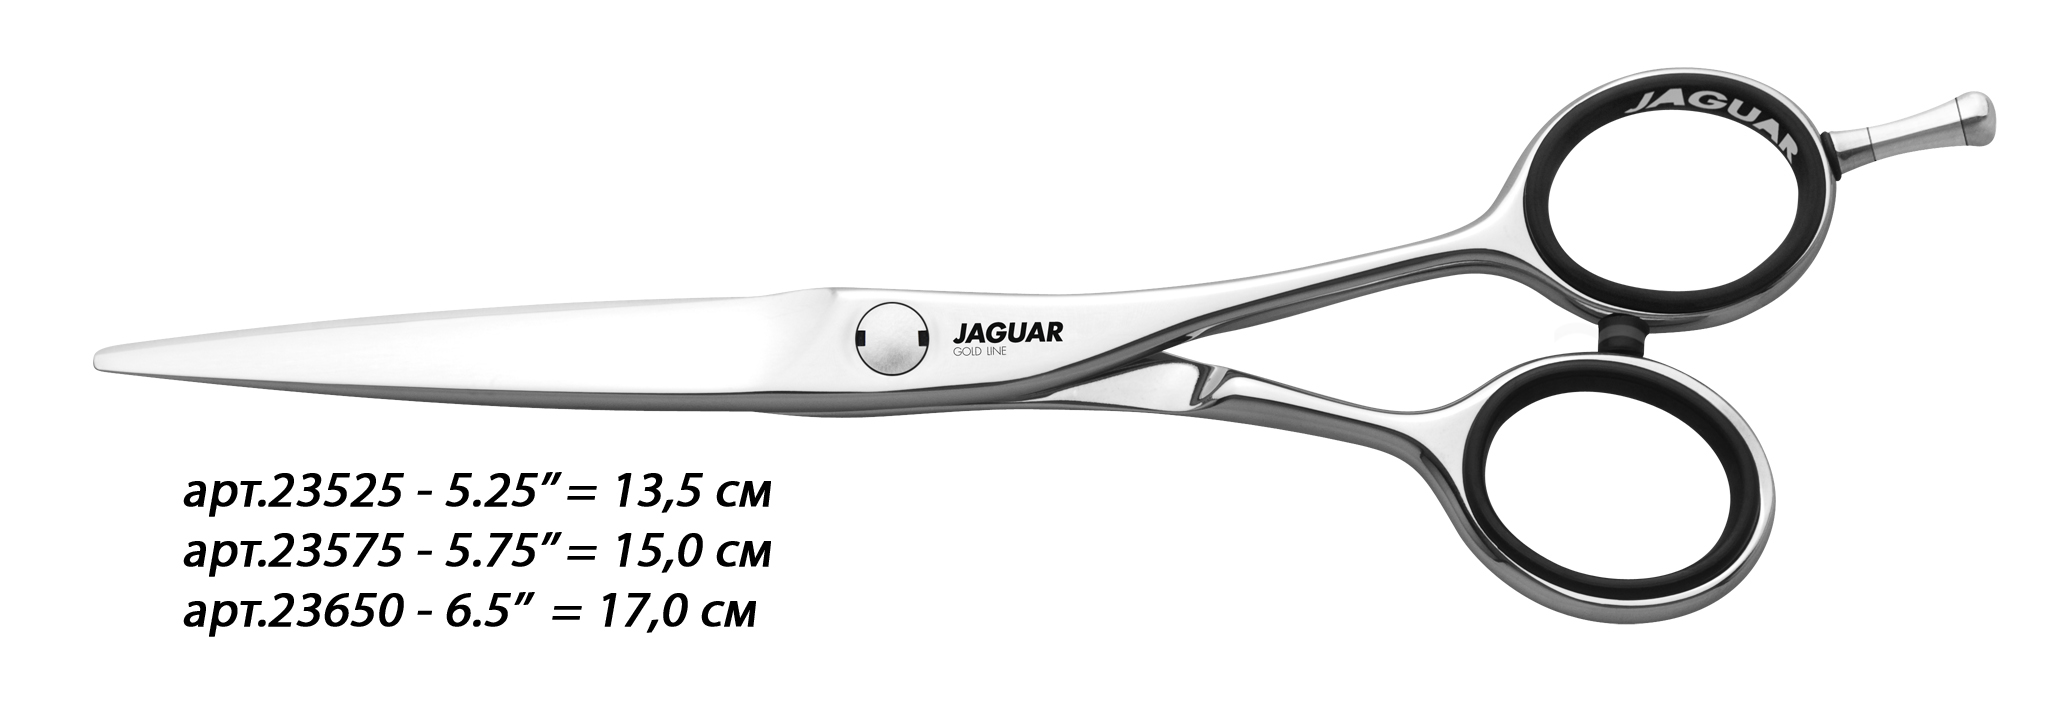 JAGUAR Ножницы Jaguar Dynasty E 5,25'(13,5cm)GL